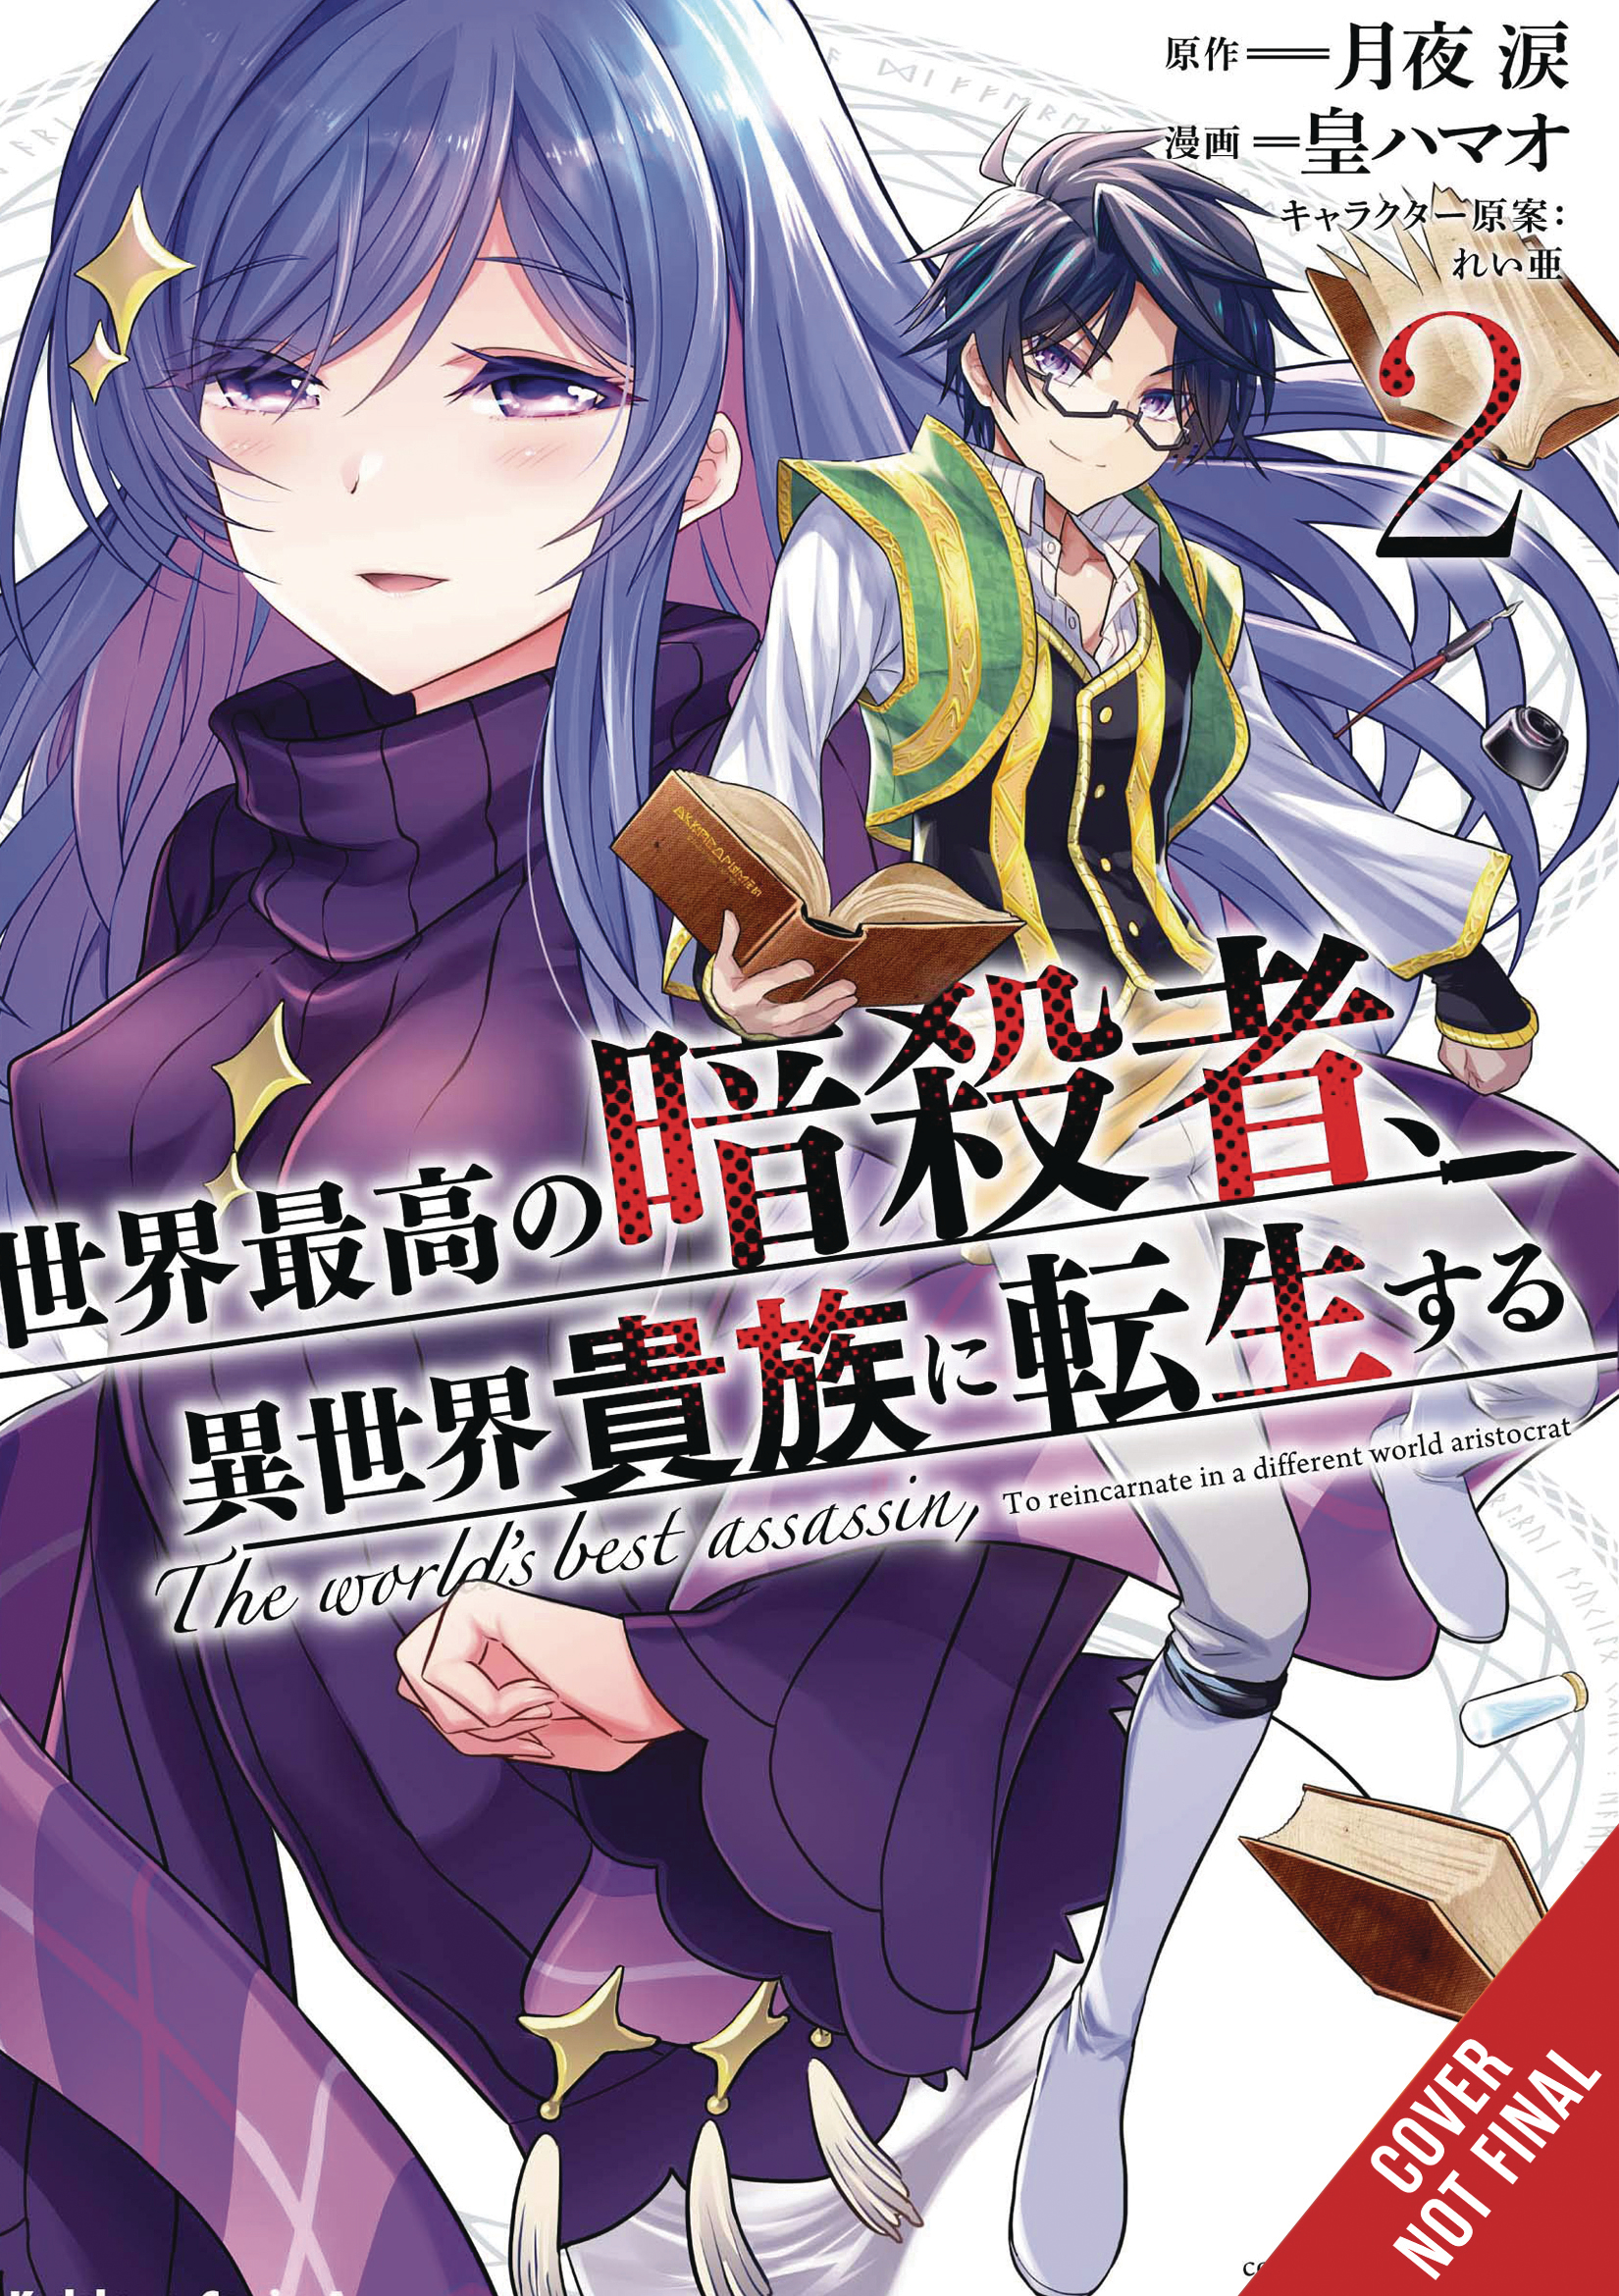 World's Best Assassin Reincarnated in Another World as an Aristocrat Manga Volume 2